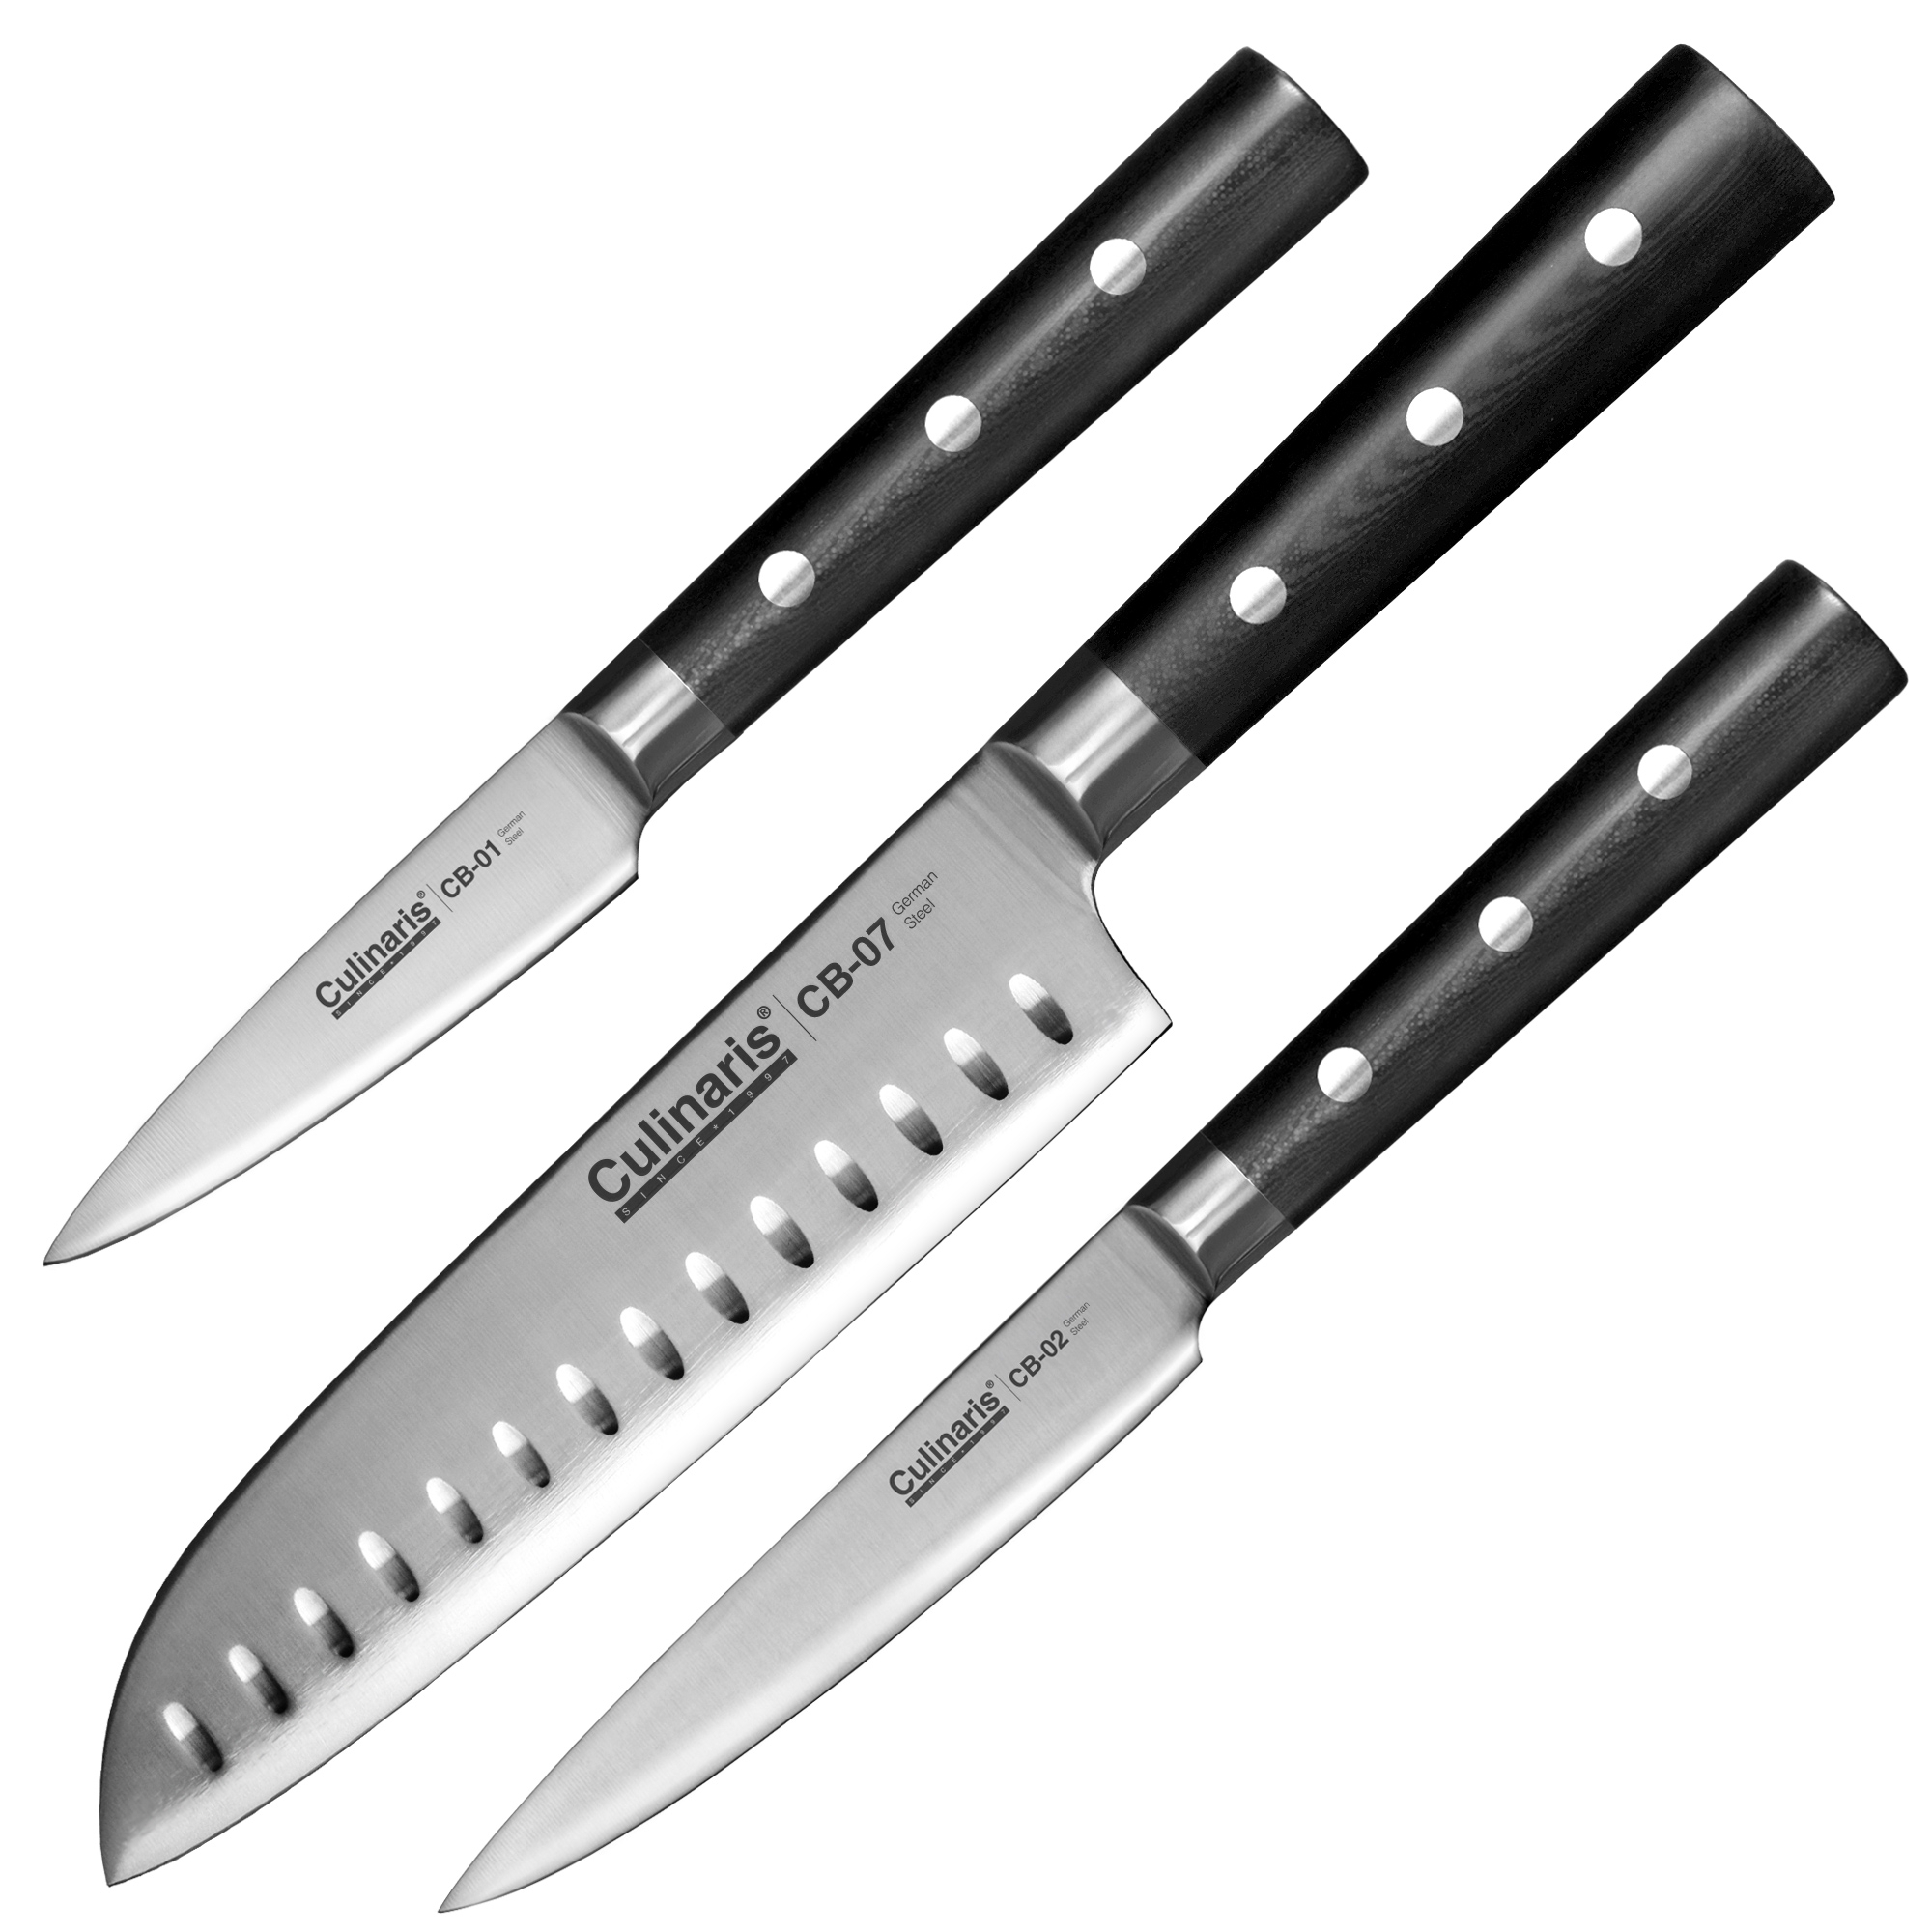 Culinaris - Knife Set - Santoku CB-07 + Paring Knife CB-01 + Utility Knife CB-02